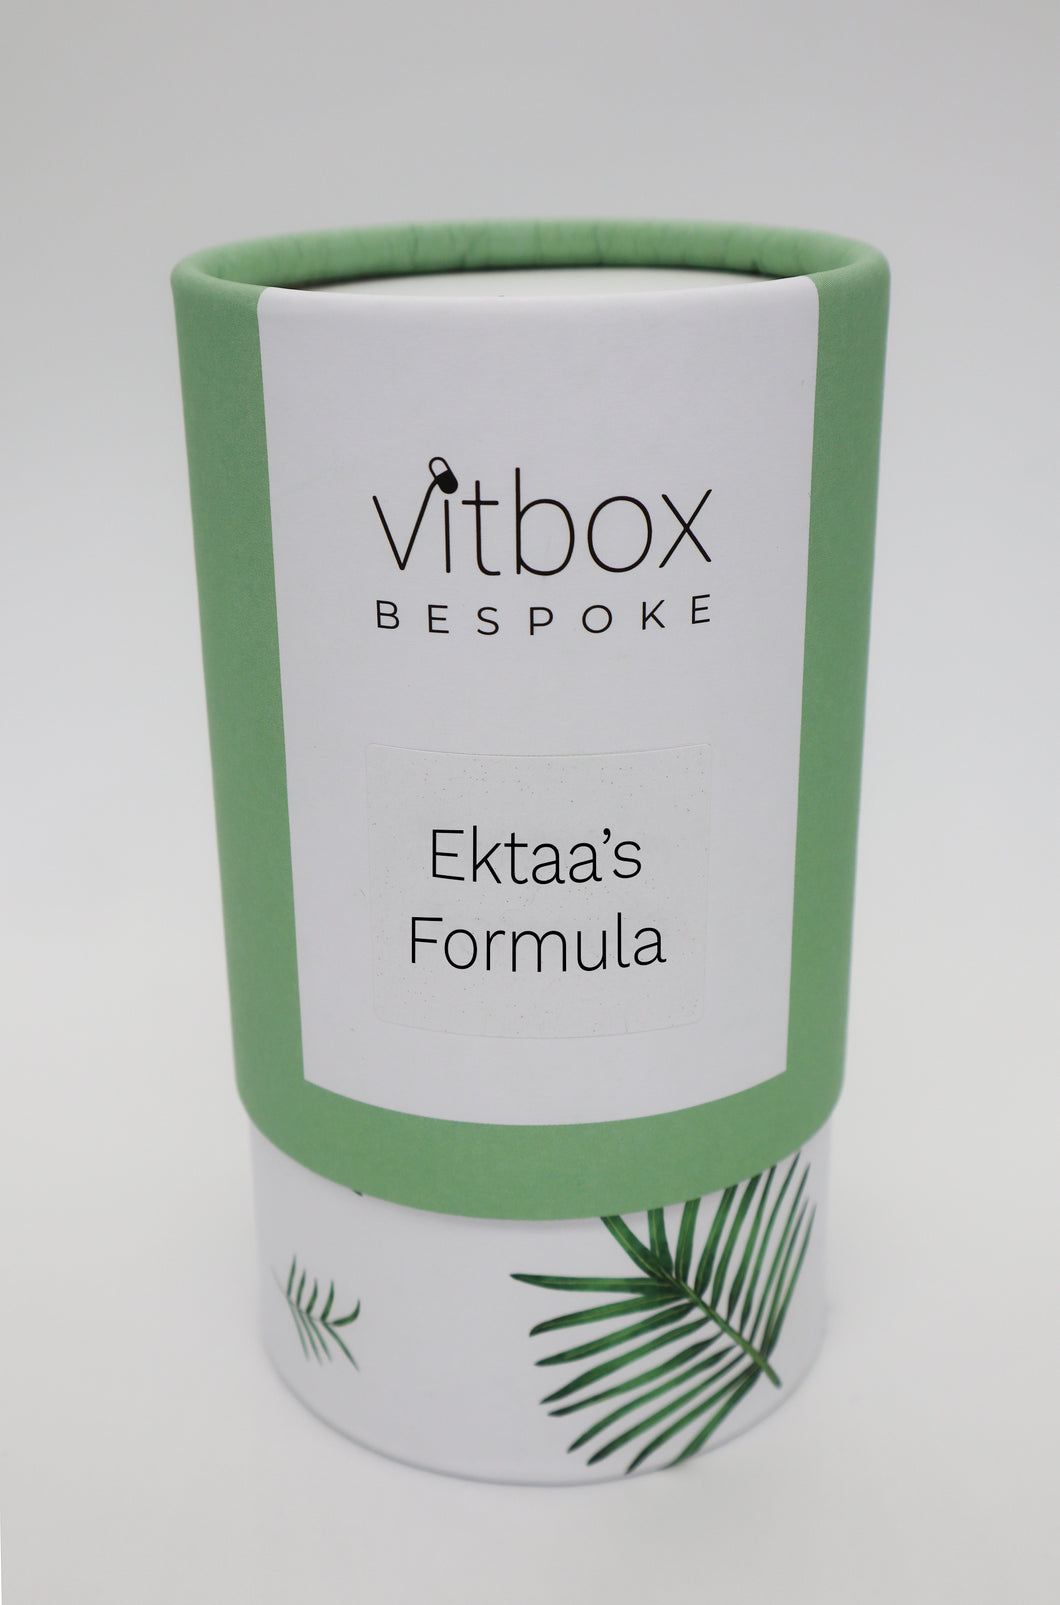 Ektaa's Vitbox Bespoke